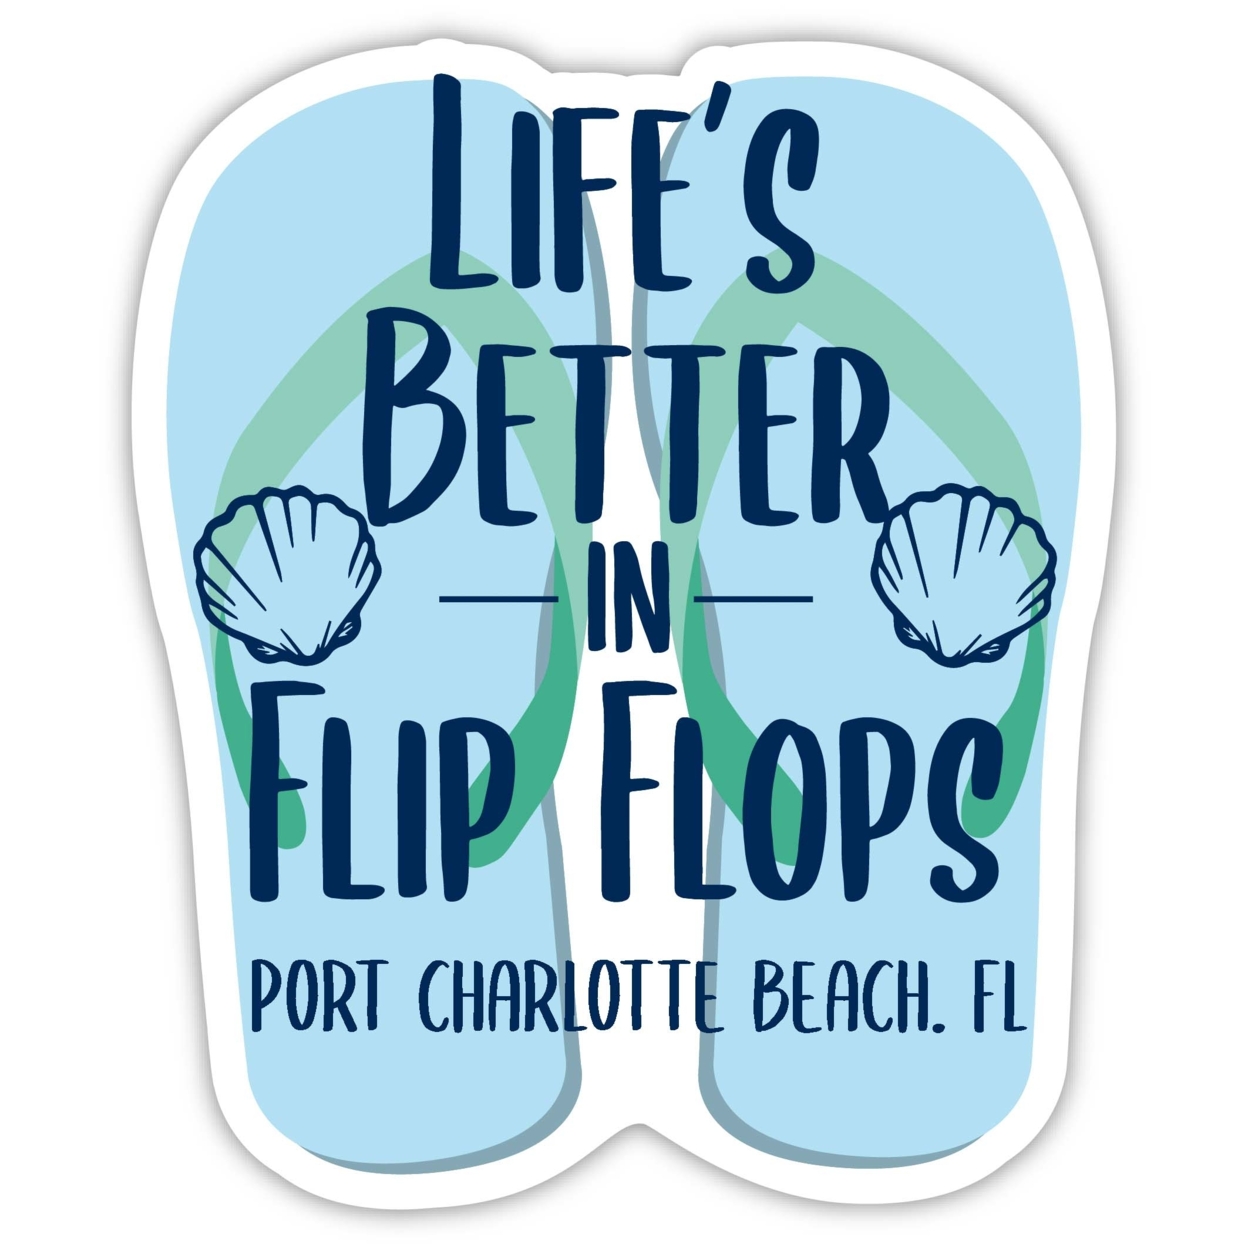 Port Charlotte Beach Florida Souvenir 4 Inch Vinyl Decal Sticker Flip Flop Design